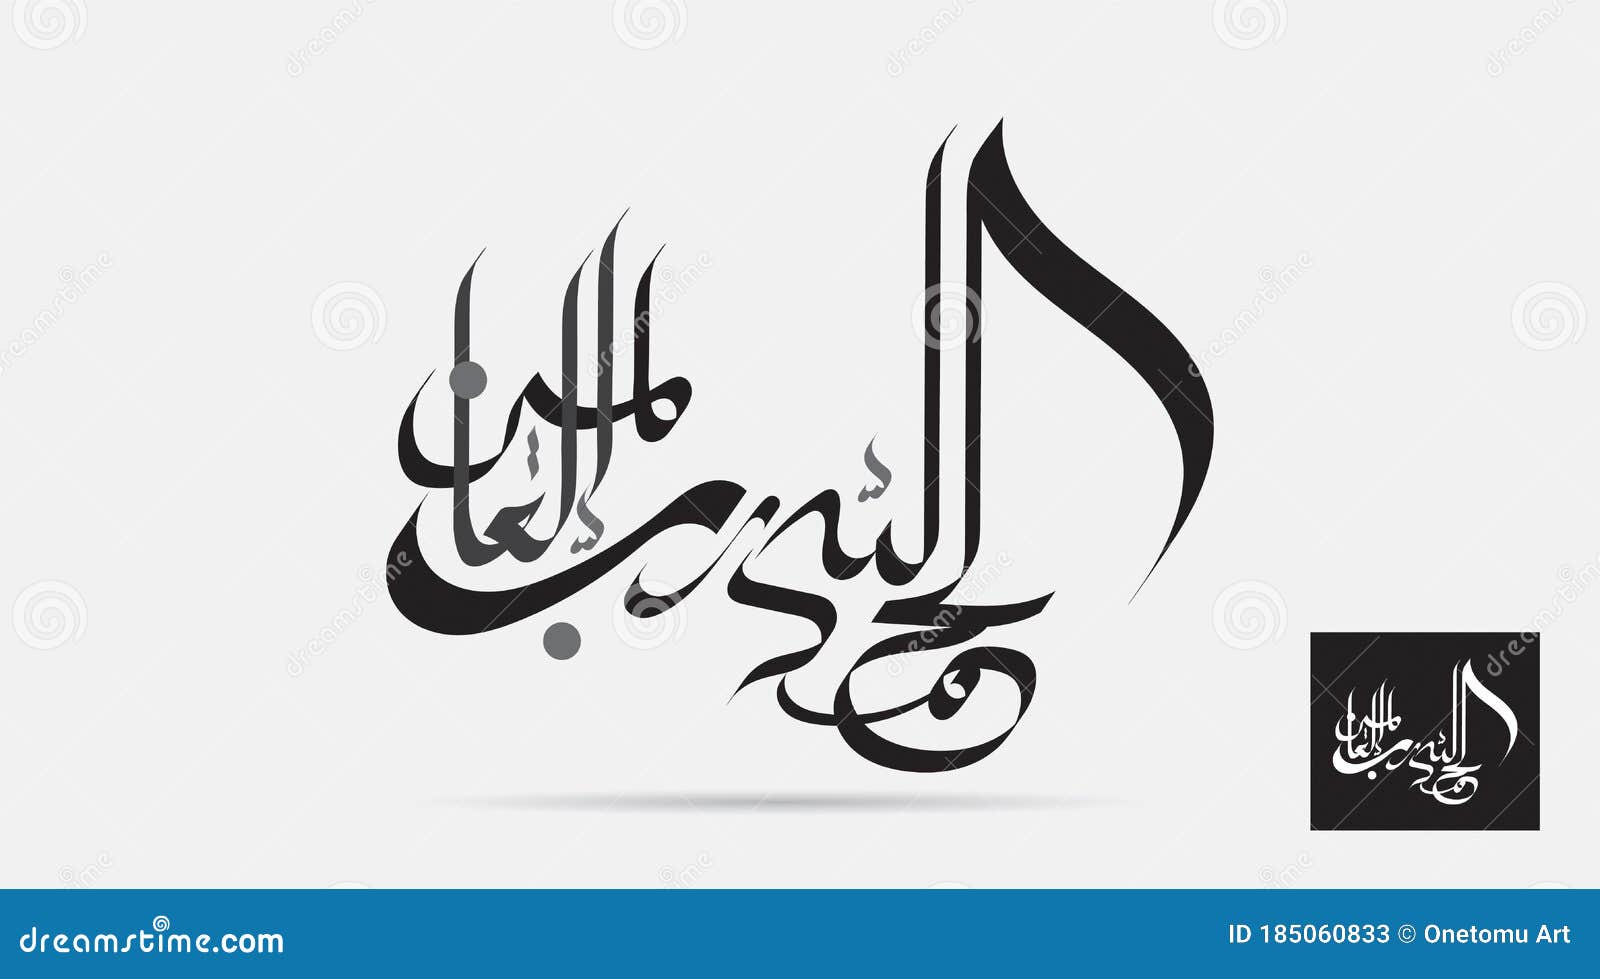 Design Vector Of Arabic Calligraphy Alhamdulillah Stock Vector Illustration Of Praise Calligraphy